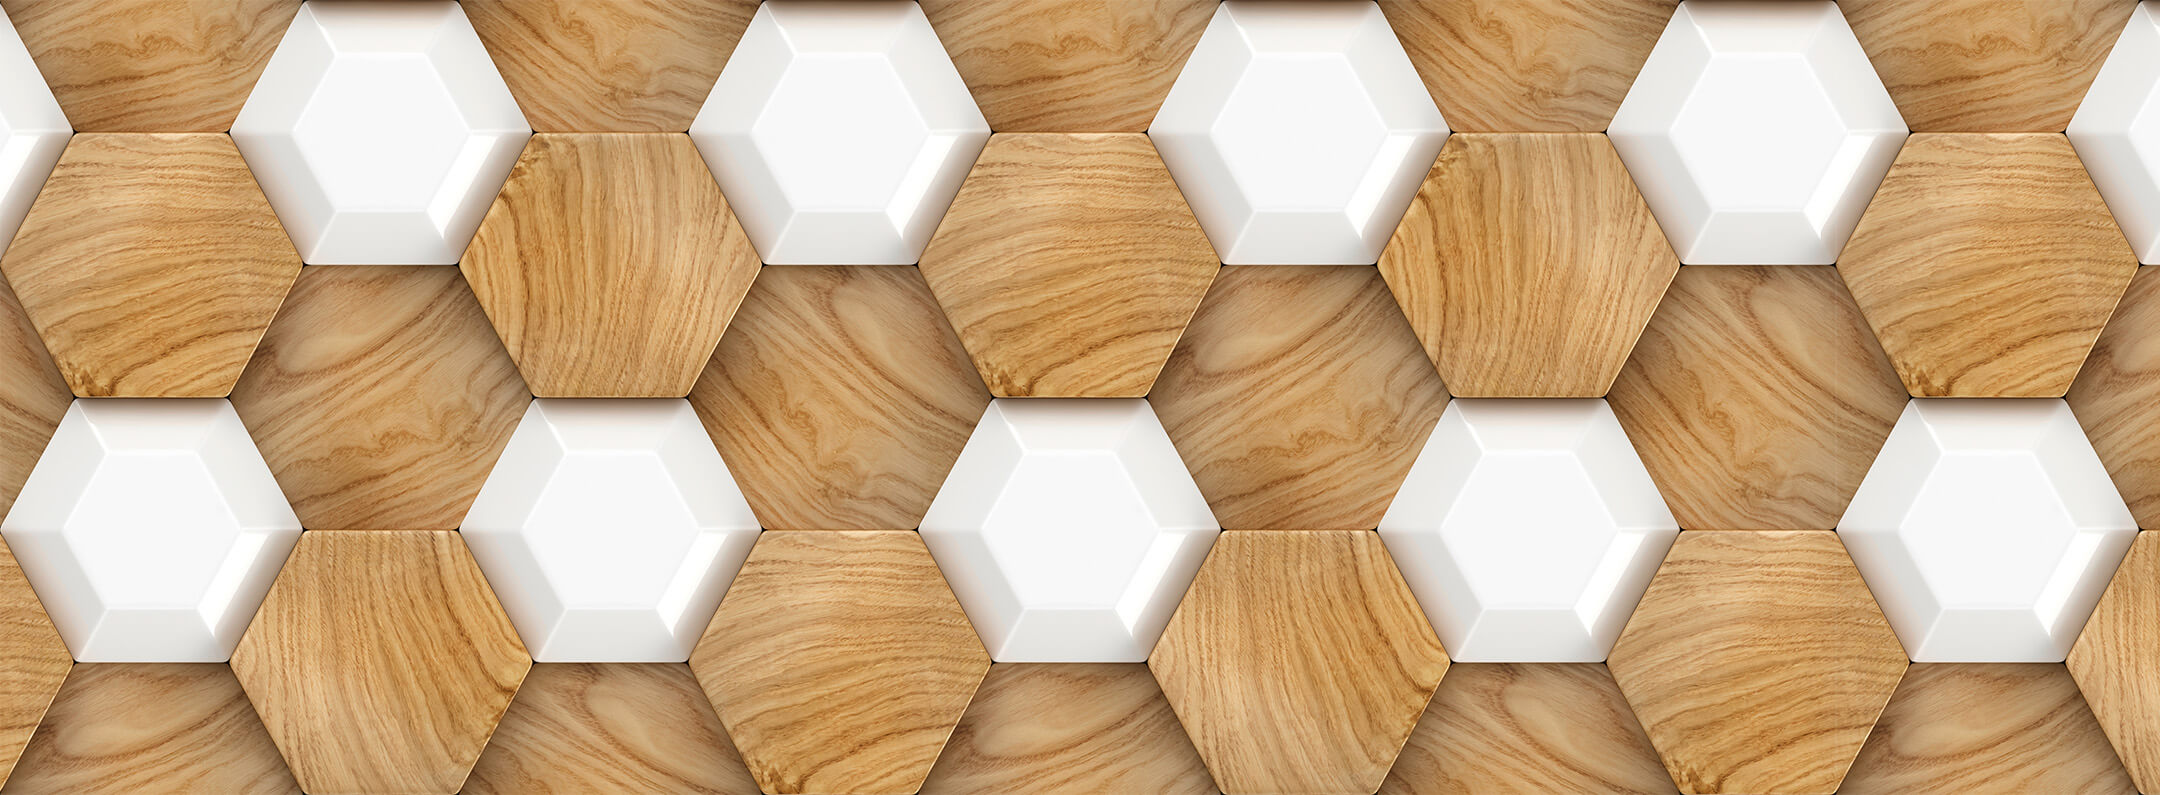 Hexagon Block Wood Wallpaper Mural 3d Wall Uk